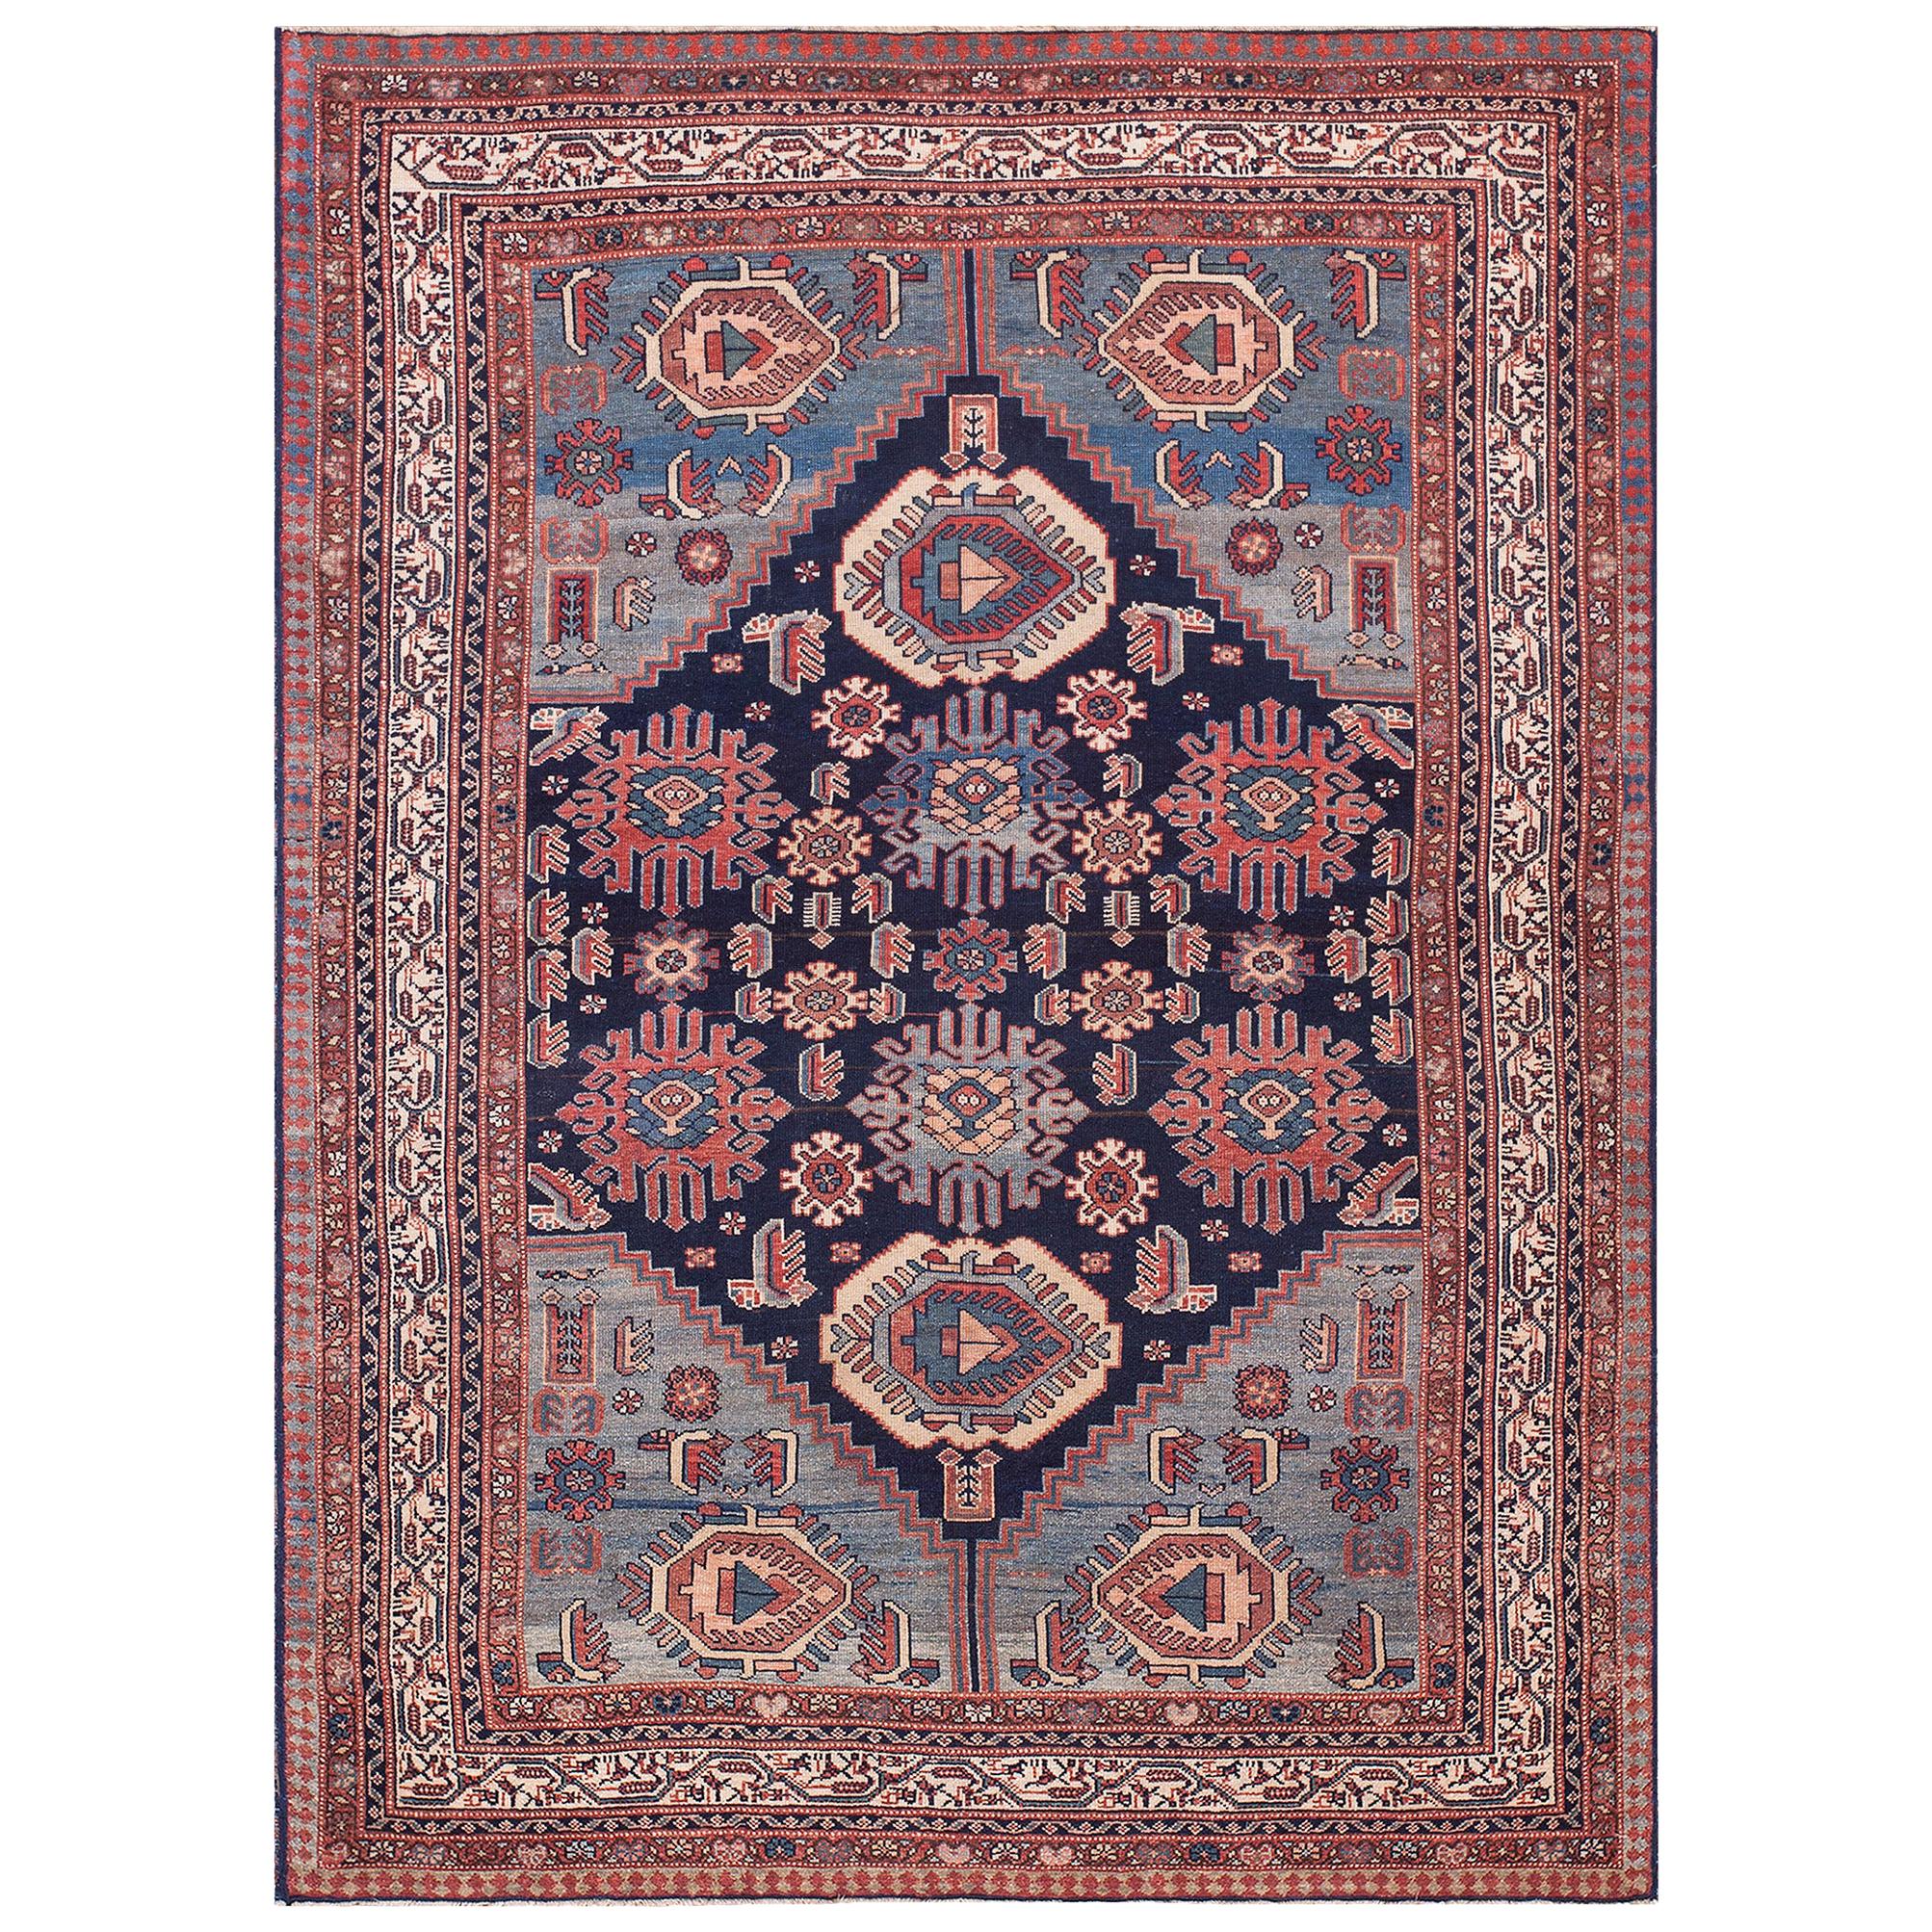 19th Century Persian Malayer Carpet ( 4'10" x 6'2" - 148 x 188 )